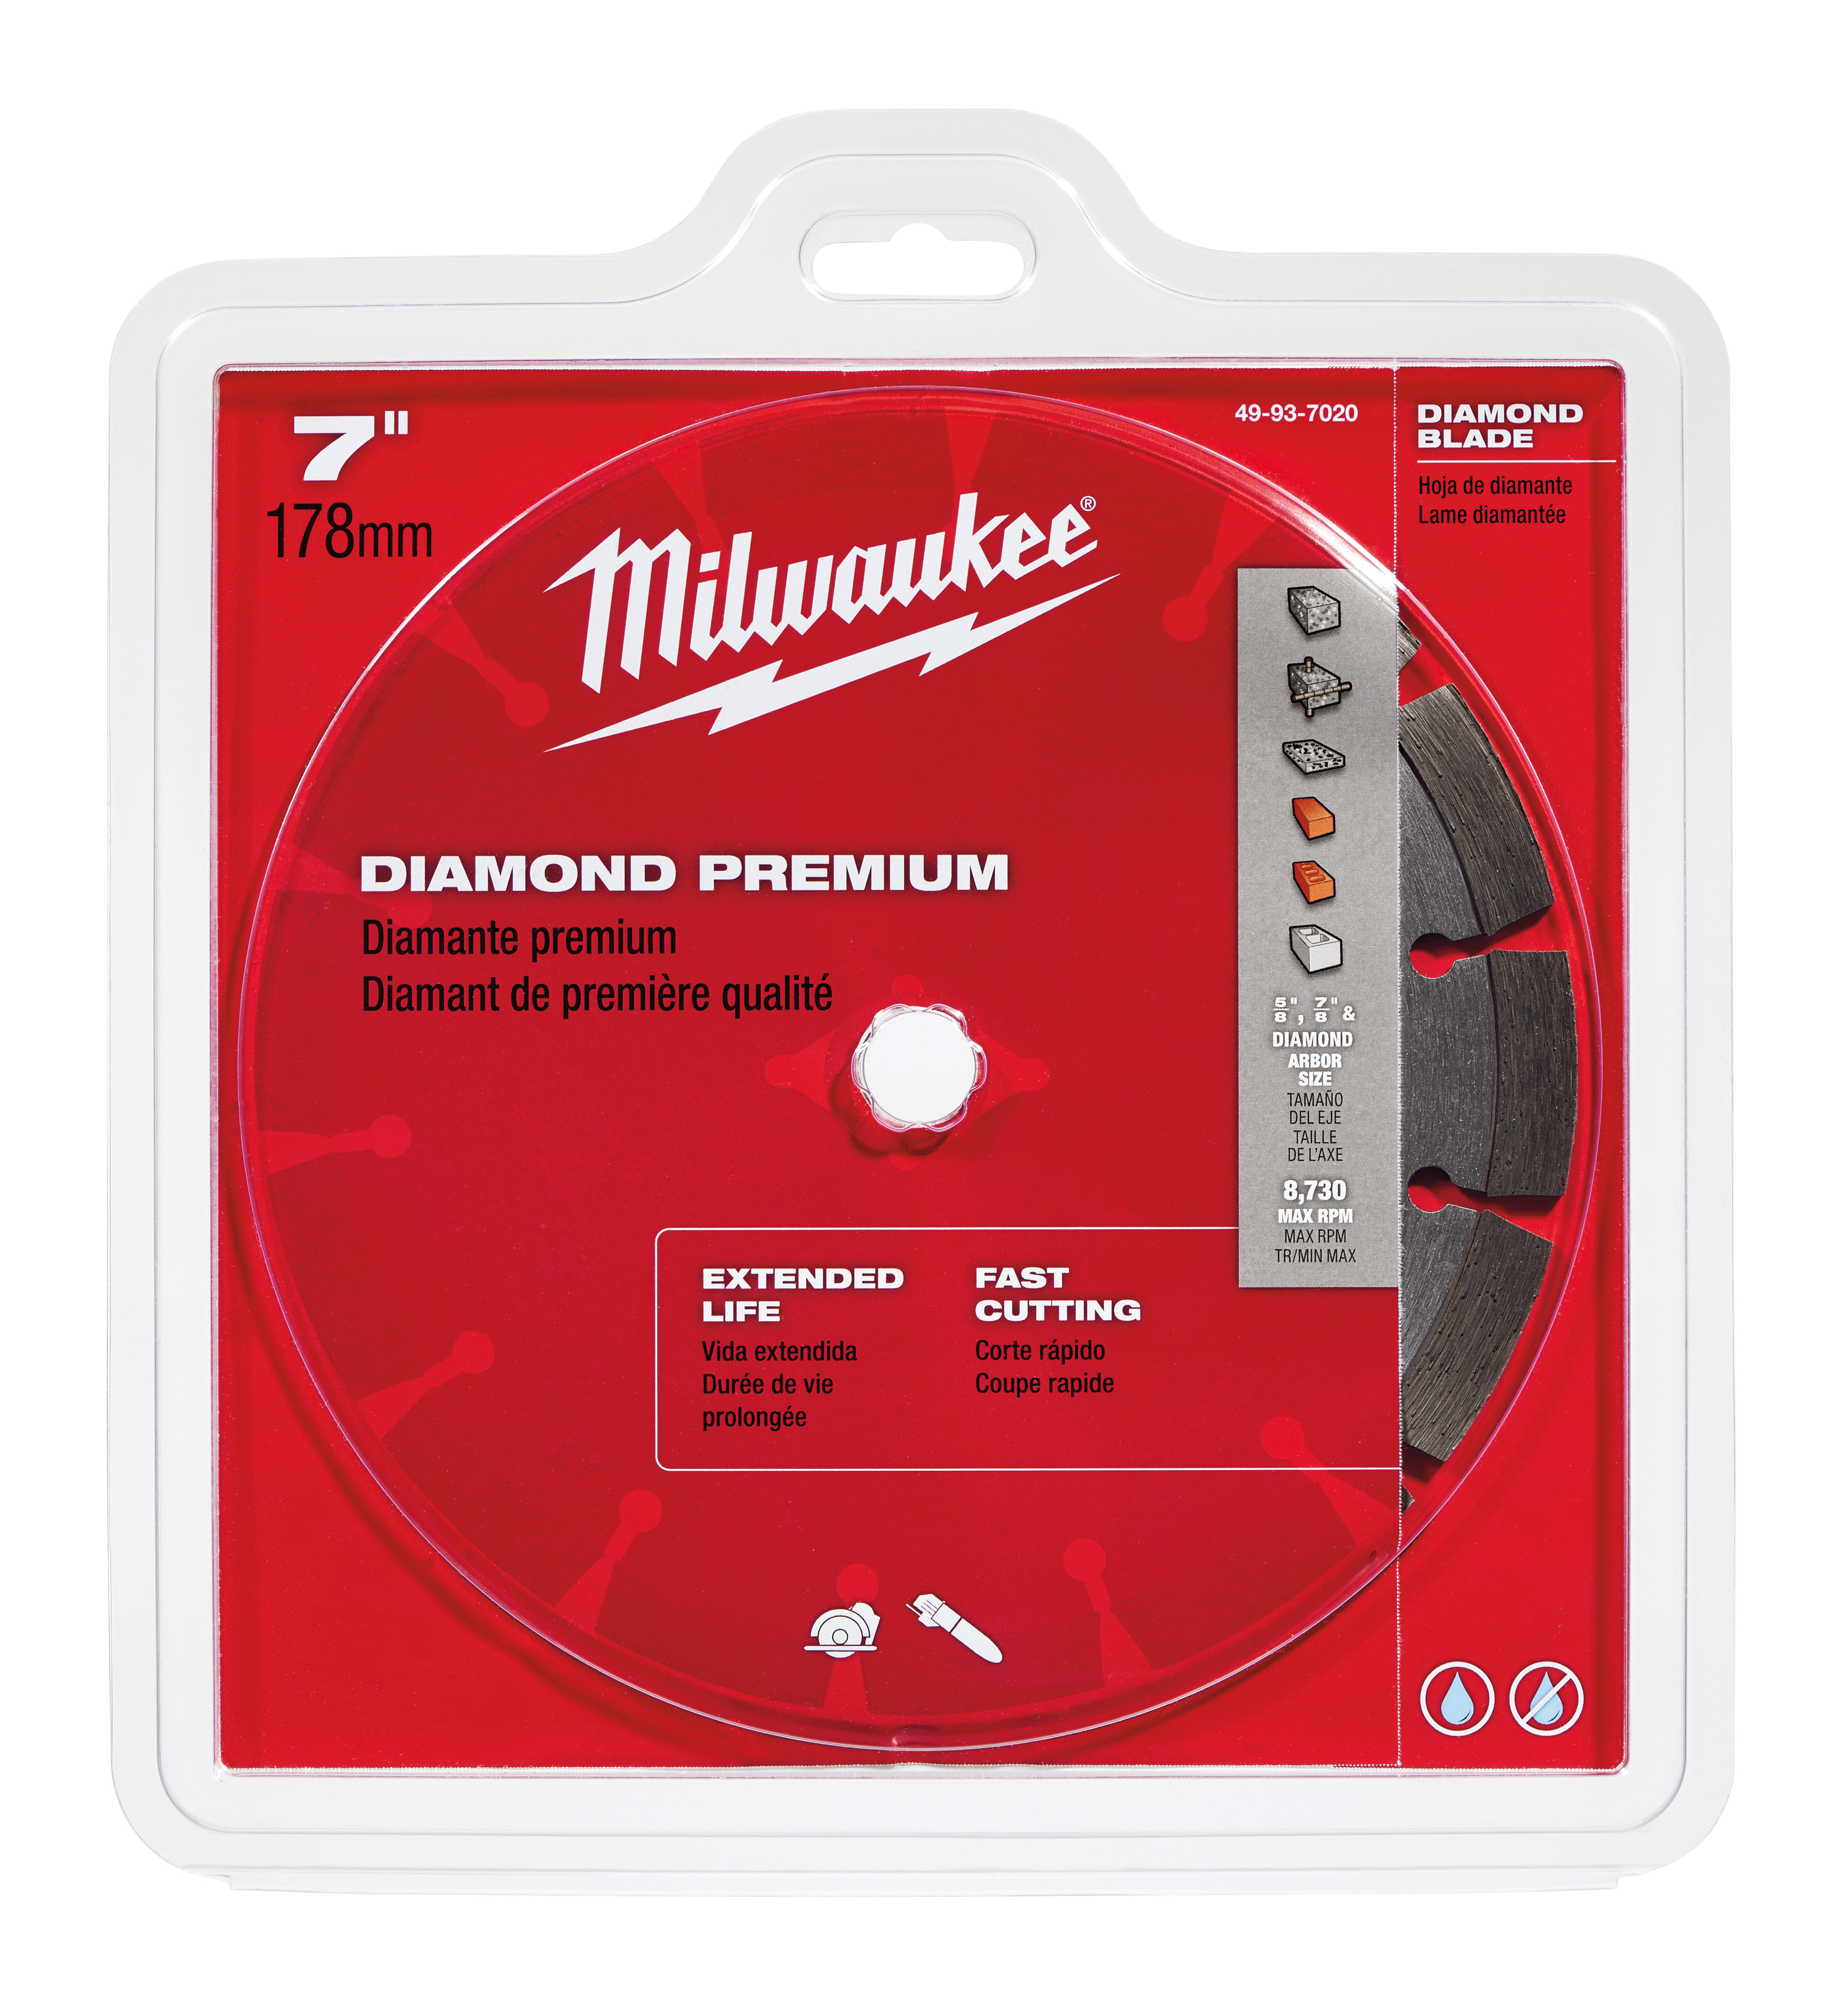 Diamond Premium Segmented Saw Blade IN STOCK Milwaukee 49-93-7000 4 in 